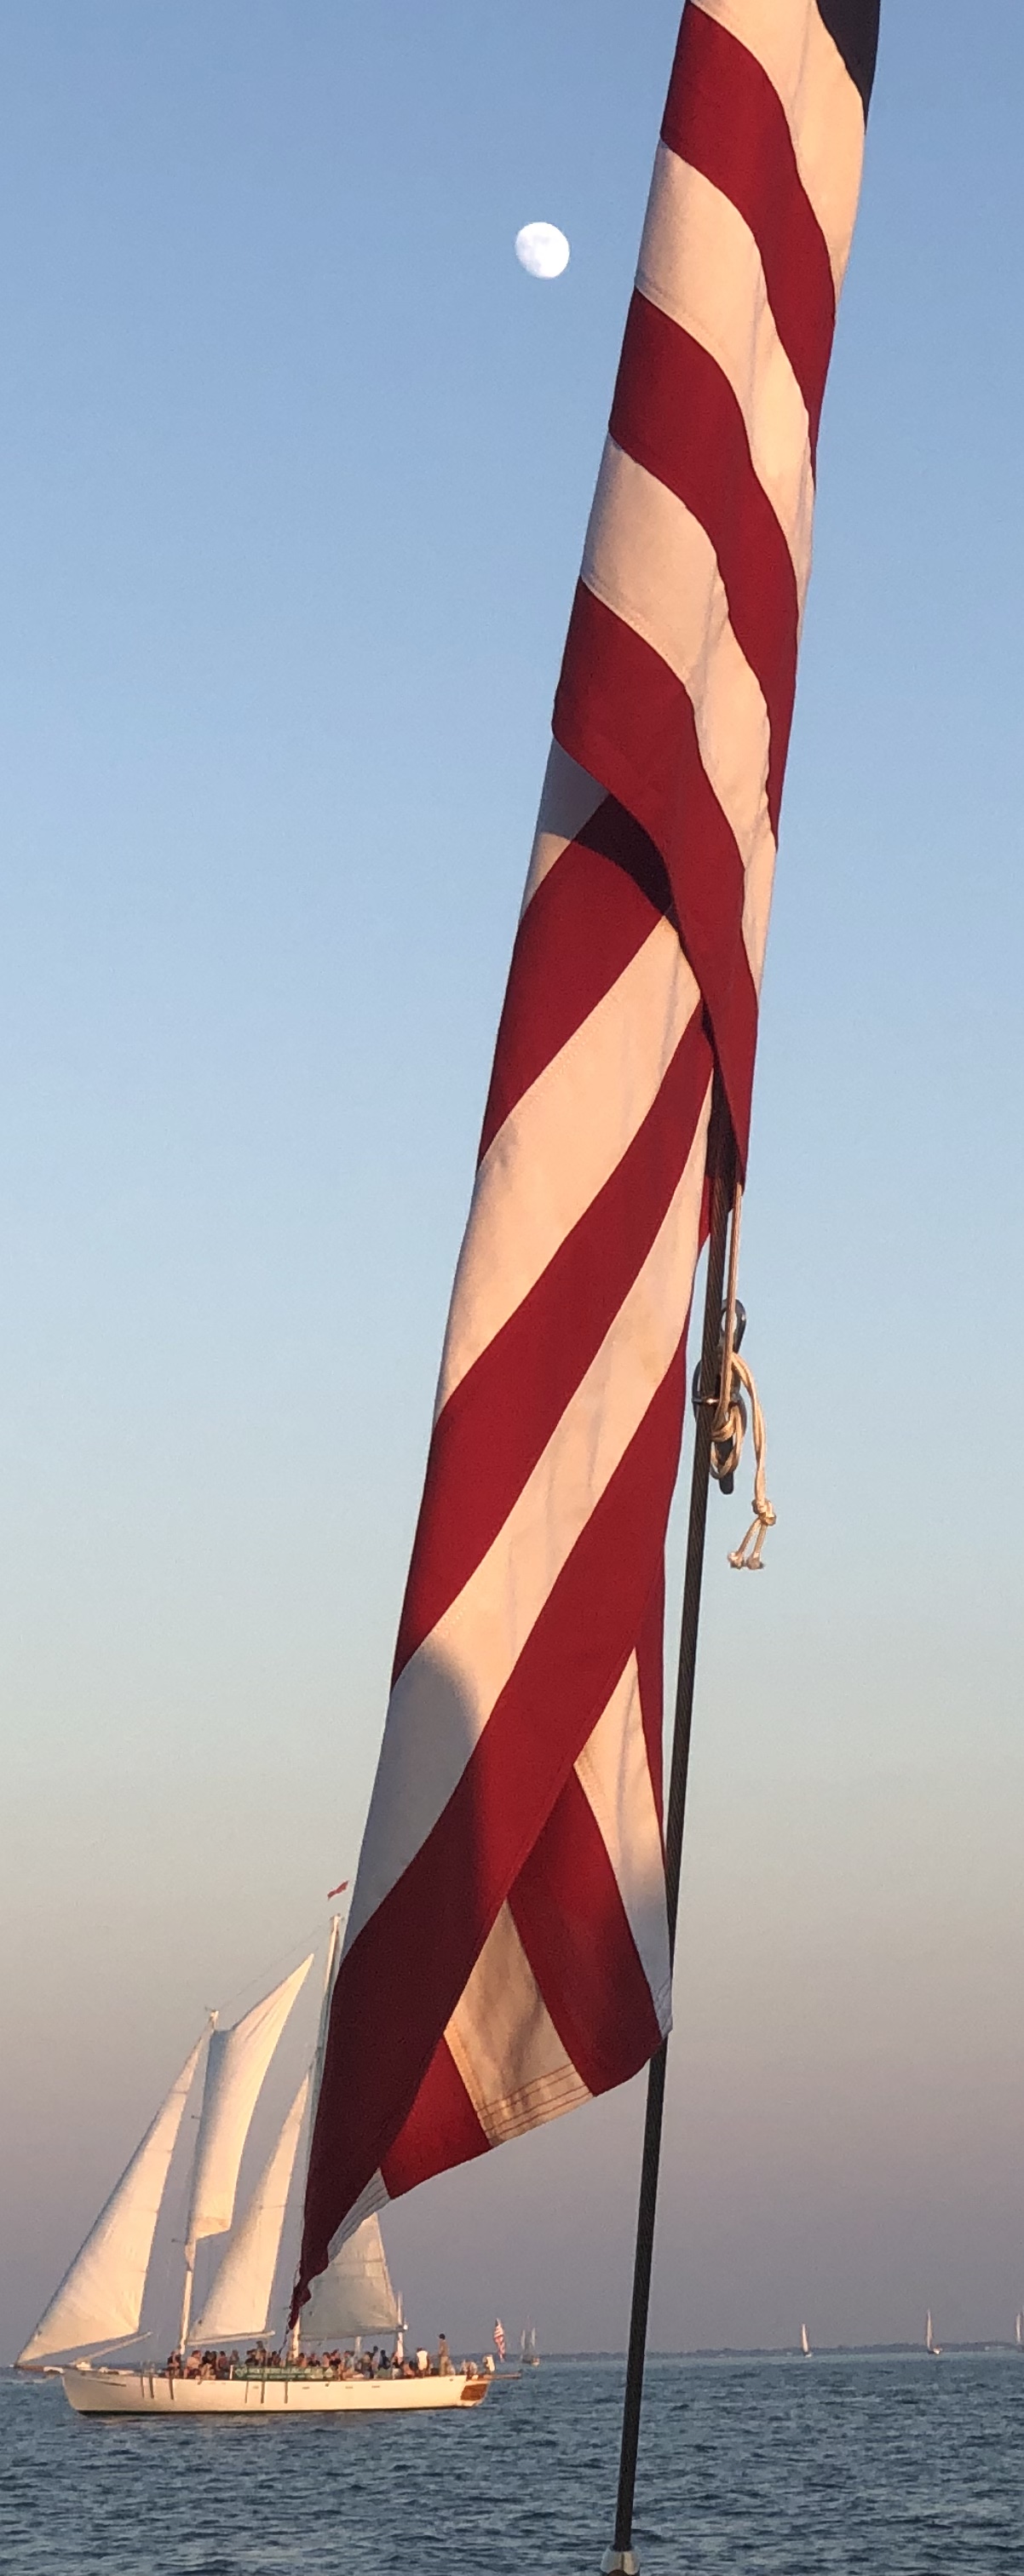 Schooner sailing behind American flag with Moon shining high in sky